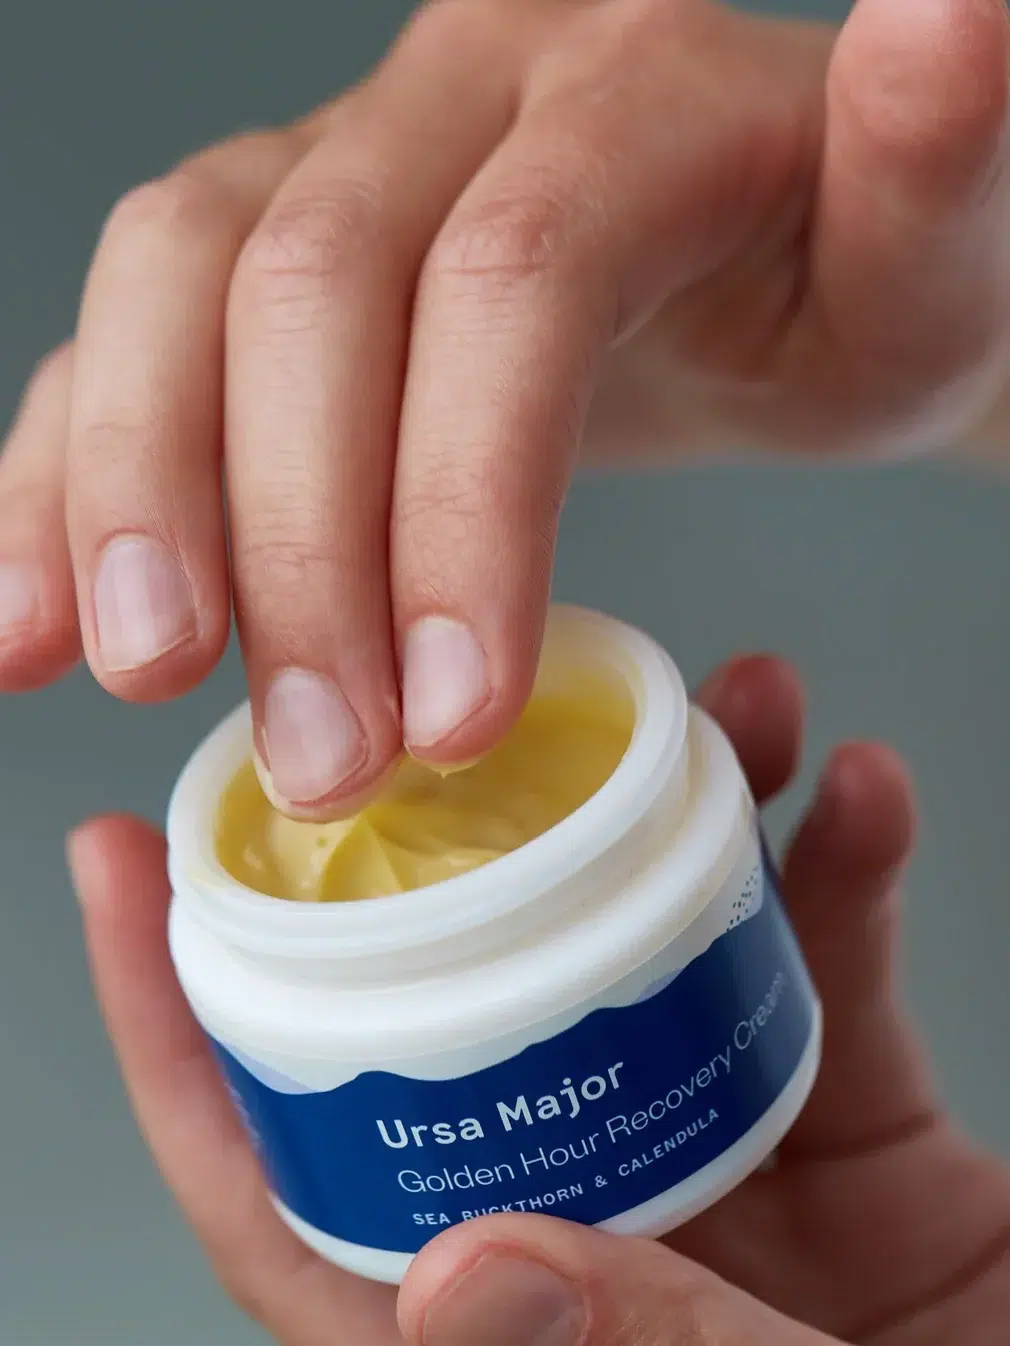 A product shot of Ursa Major Recovery Cream